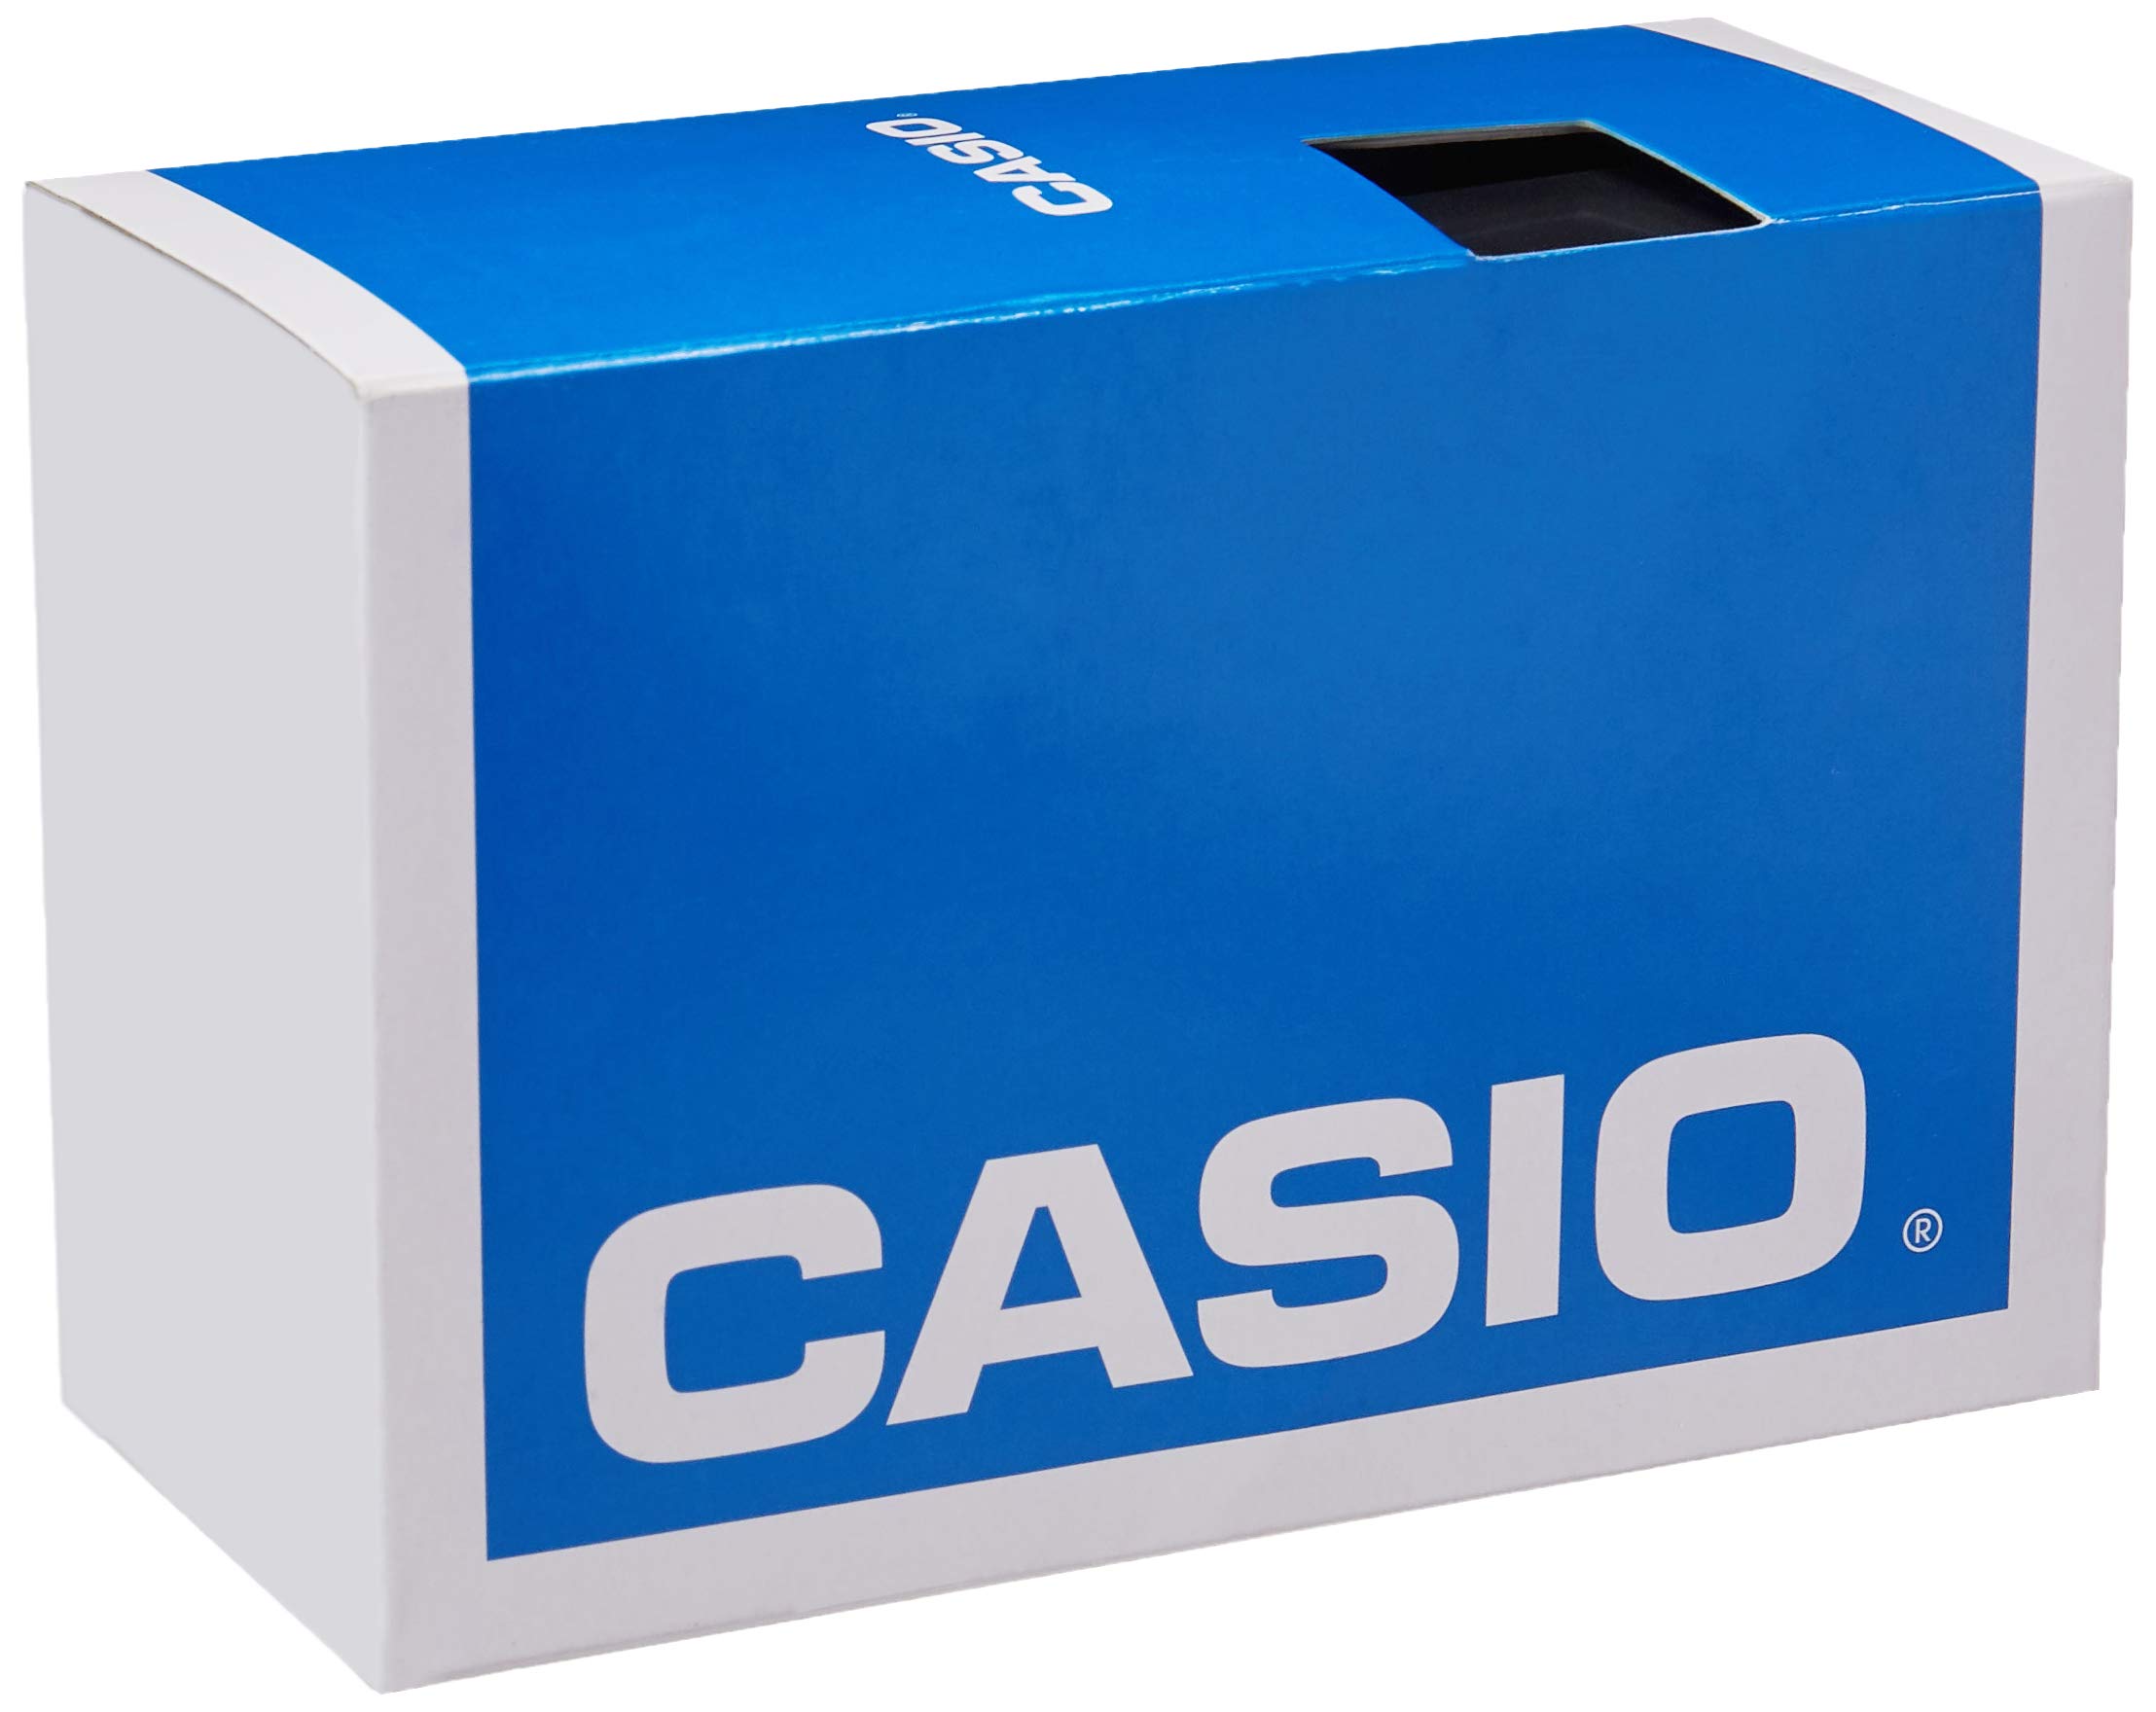 Casio Blue Dial Series